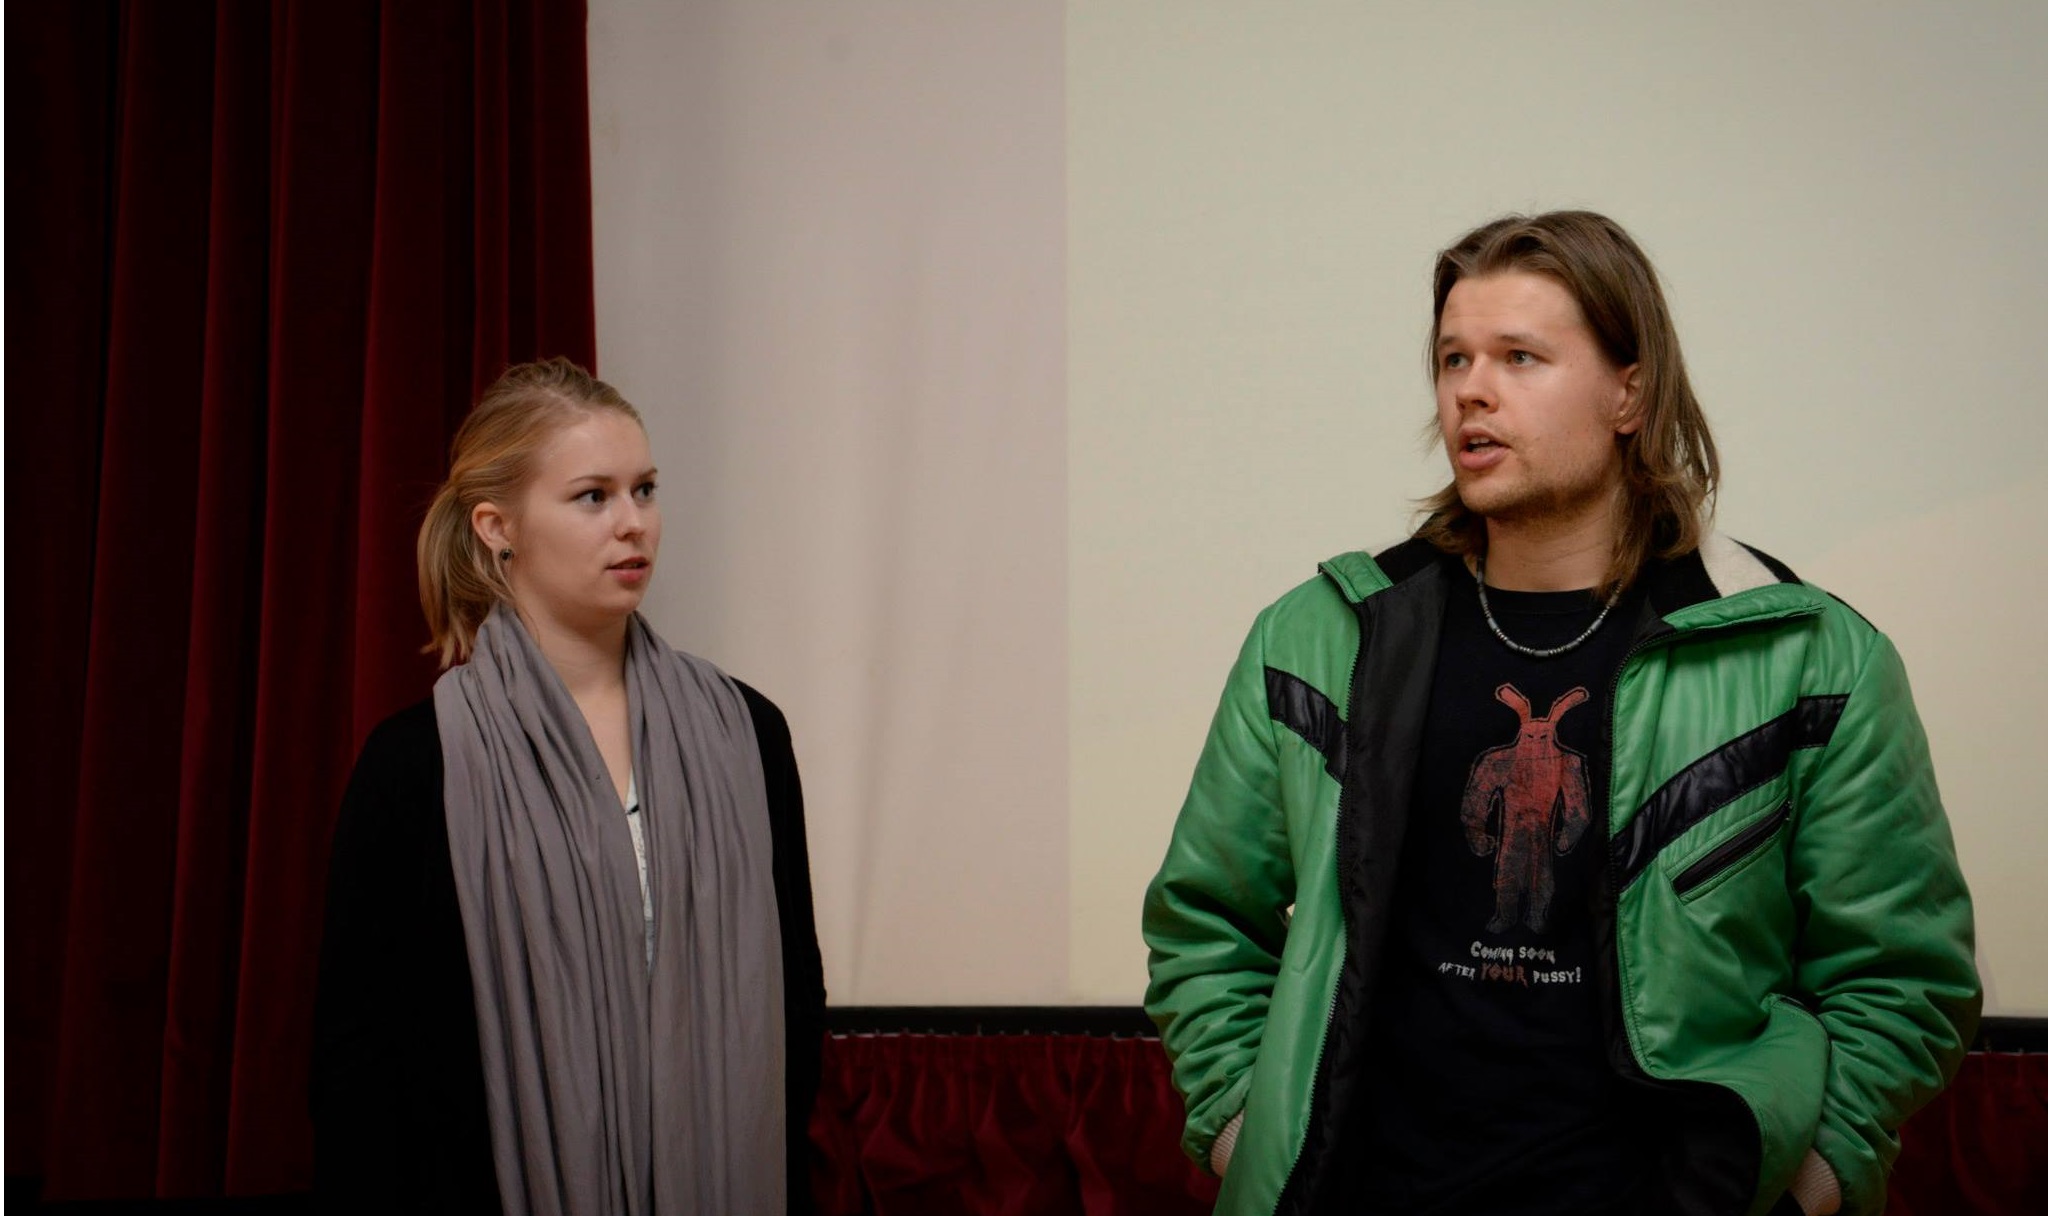 Joonas Makkonen at Northern Wave International Film Festival 2014.